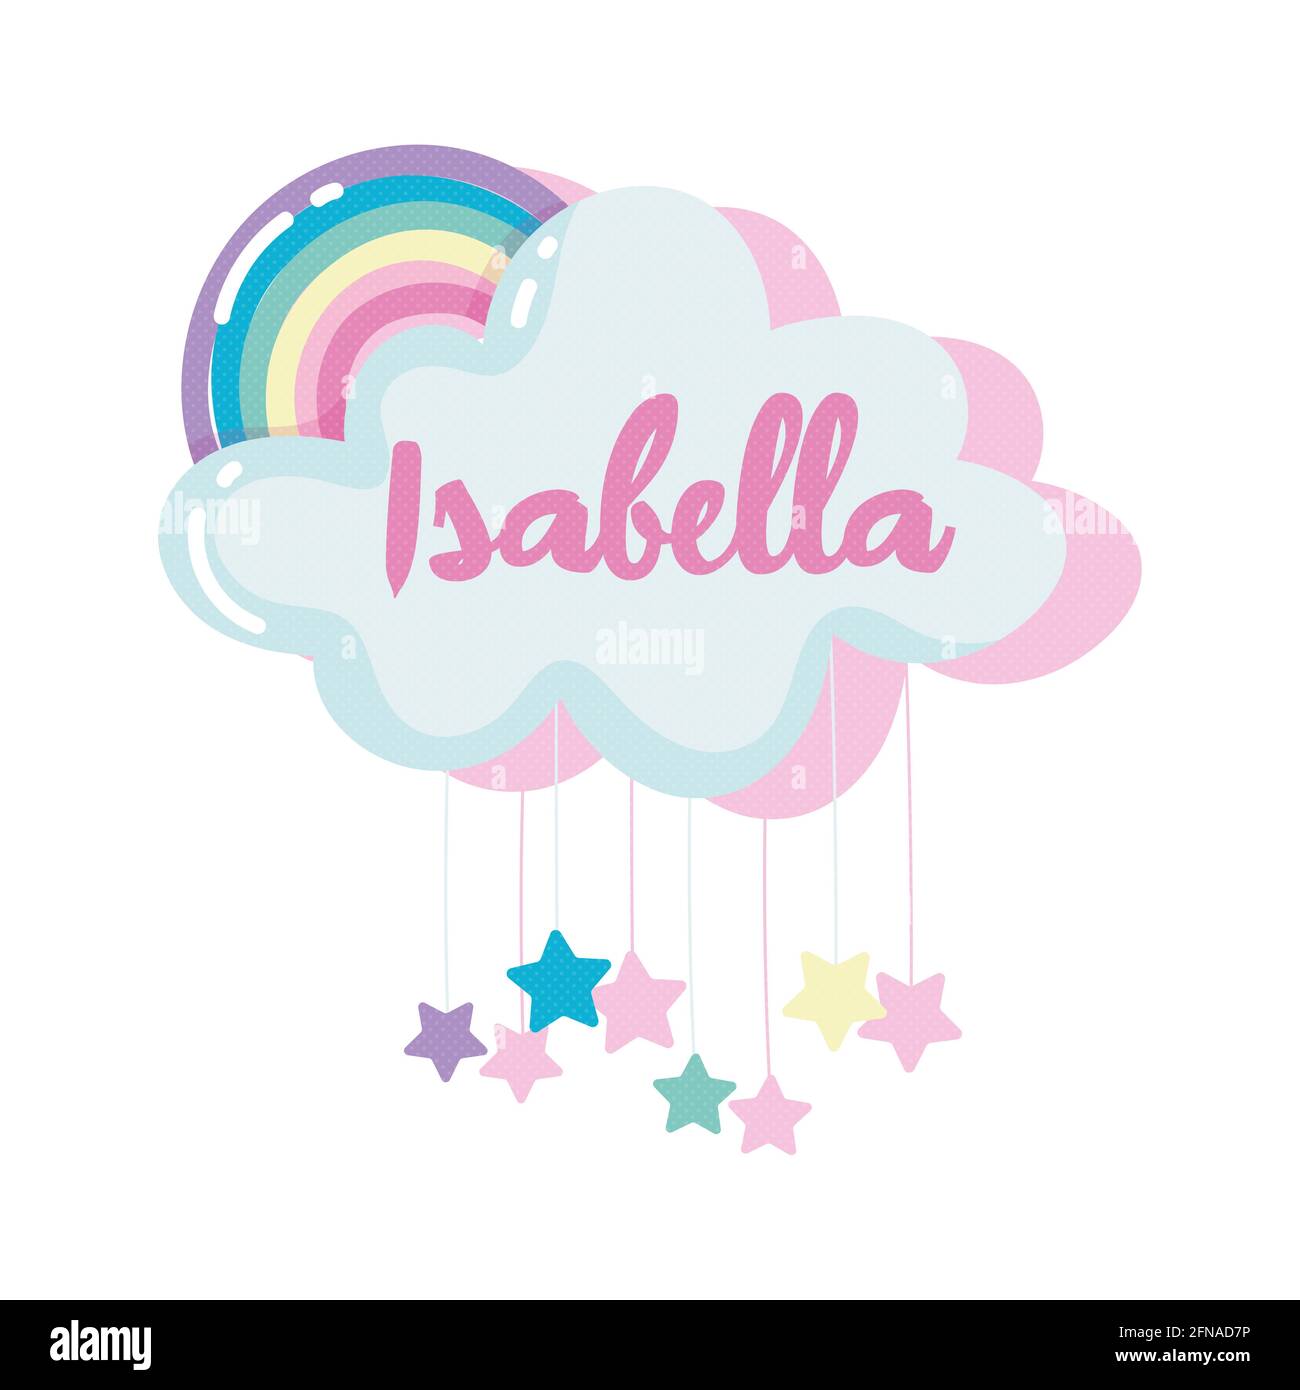 isabella girl name Stock Photo - Alamy